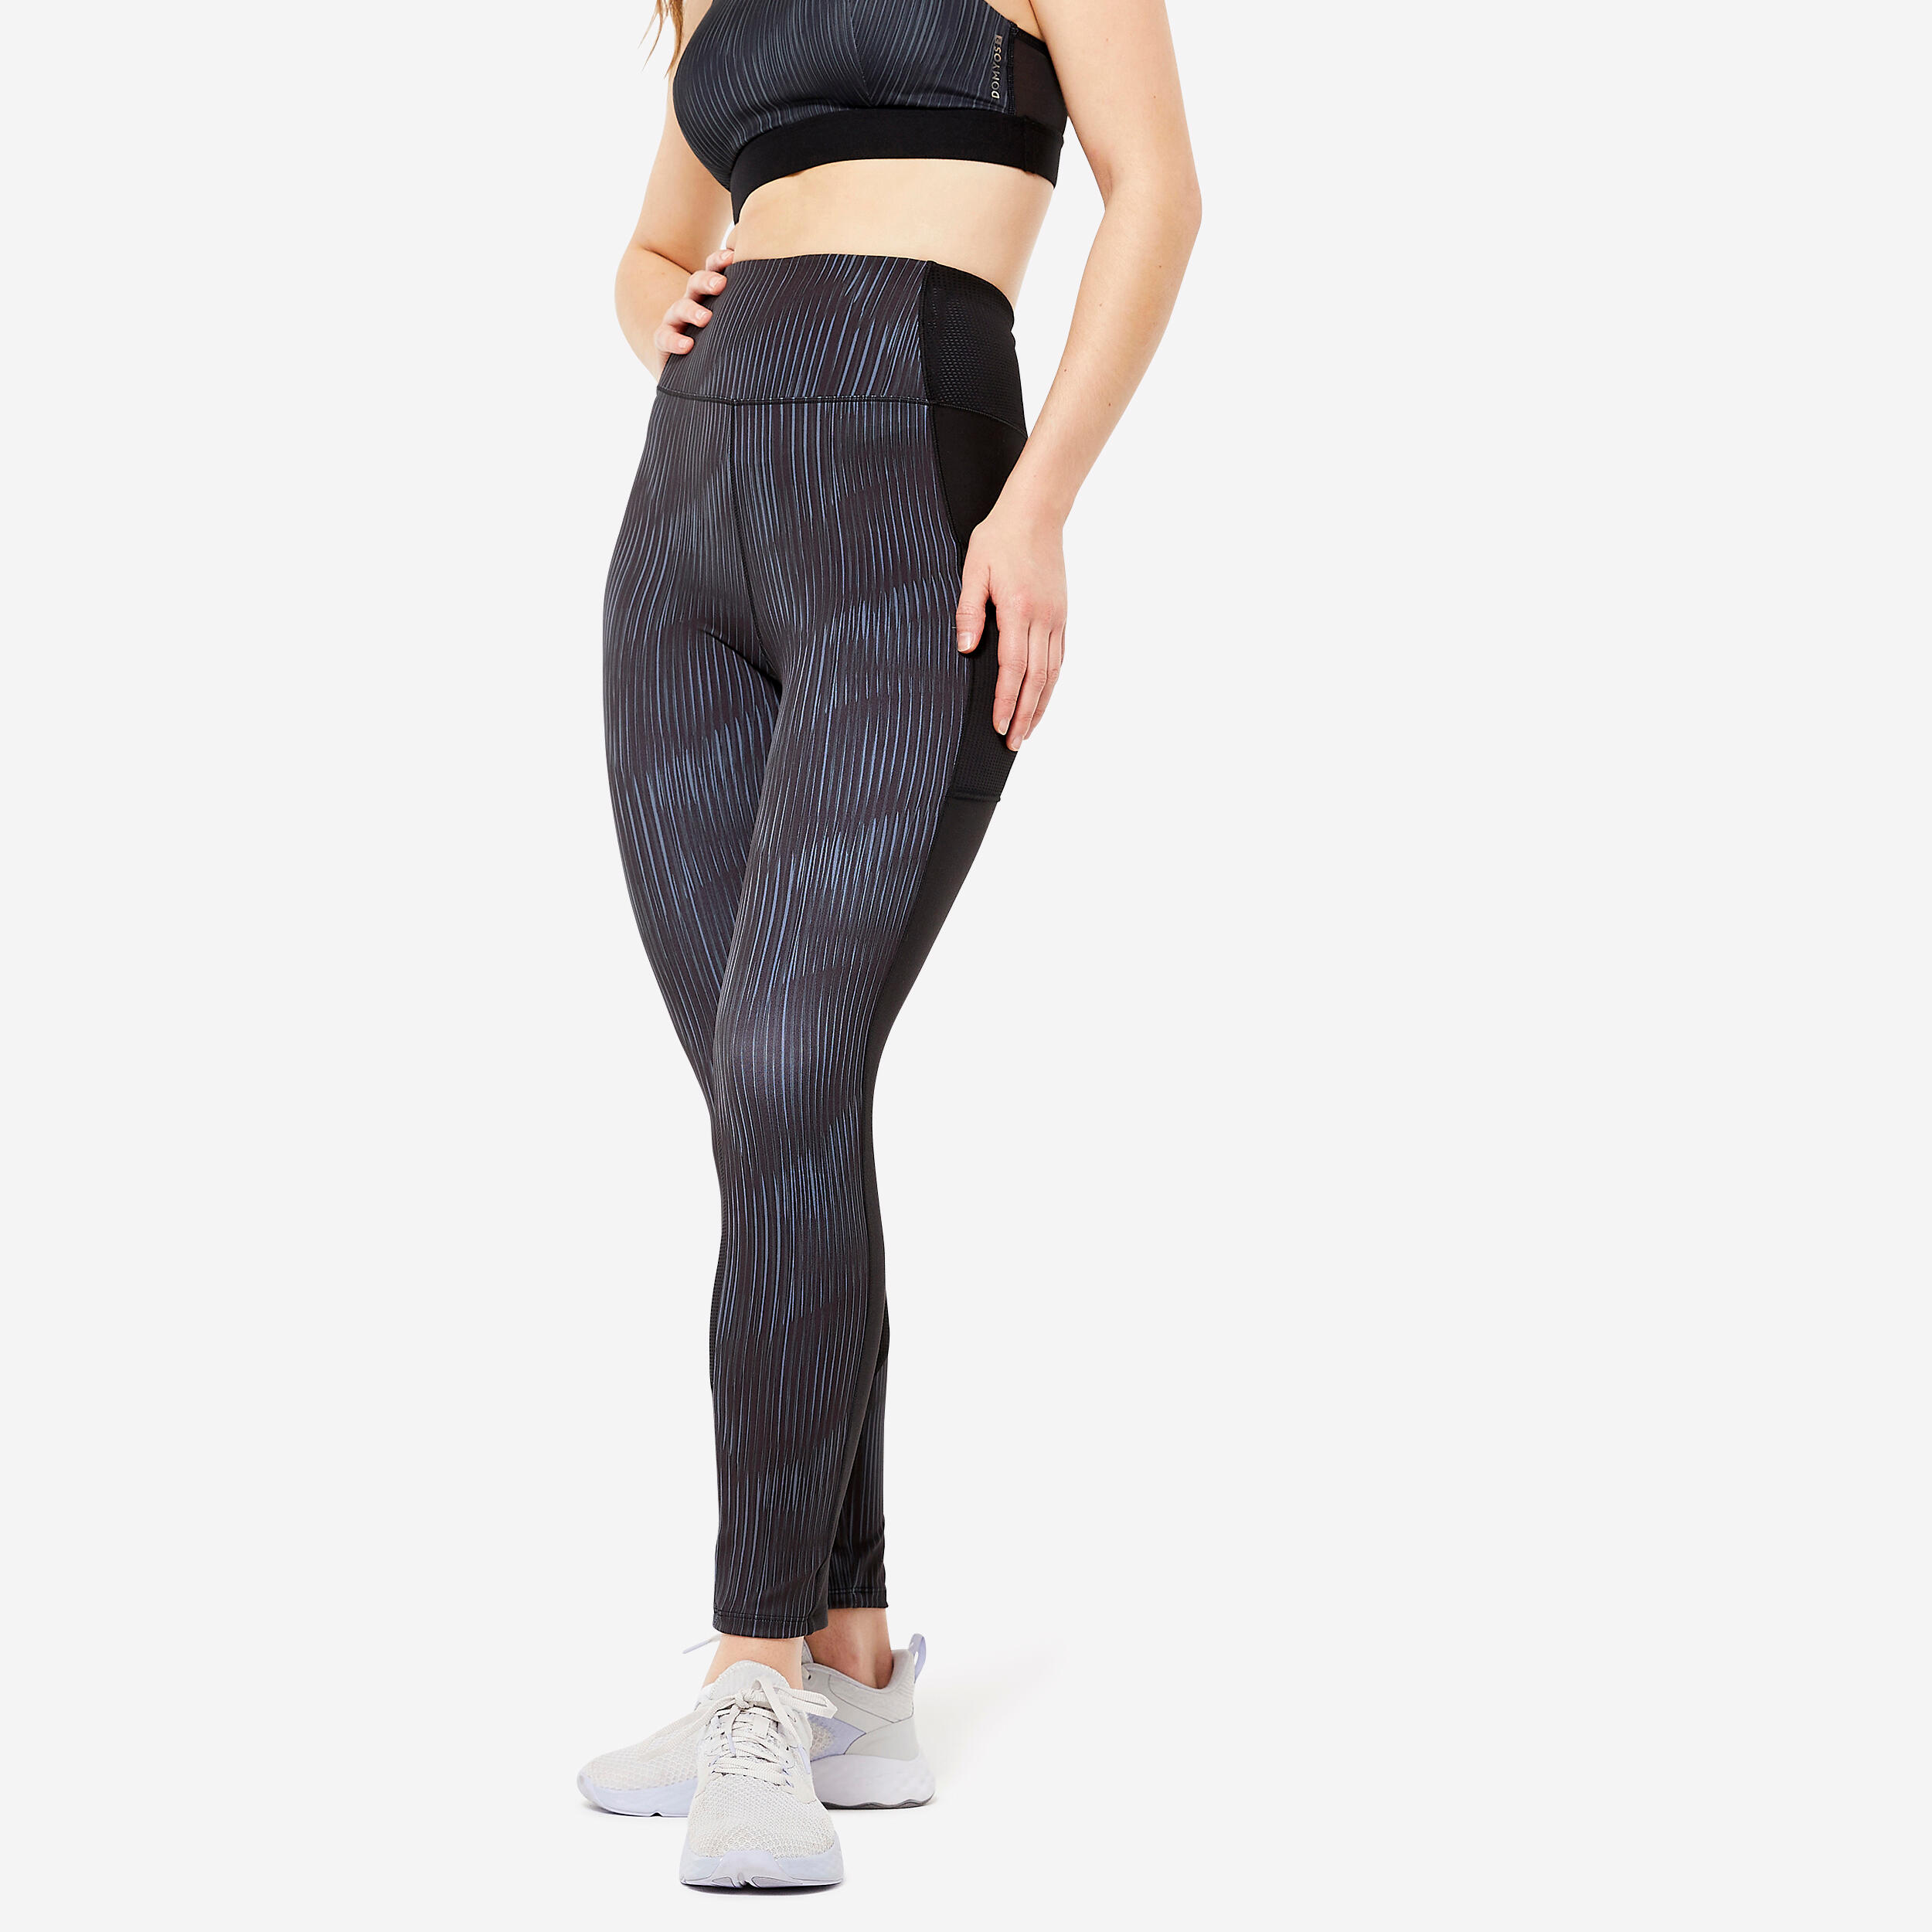 DOMYOS Women's Fitness Cardio Leggings with Phone Pocket - Black/Grey Print